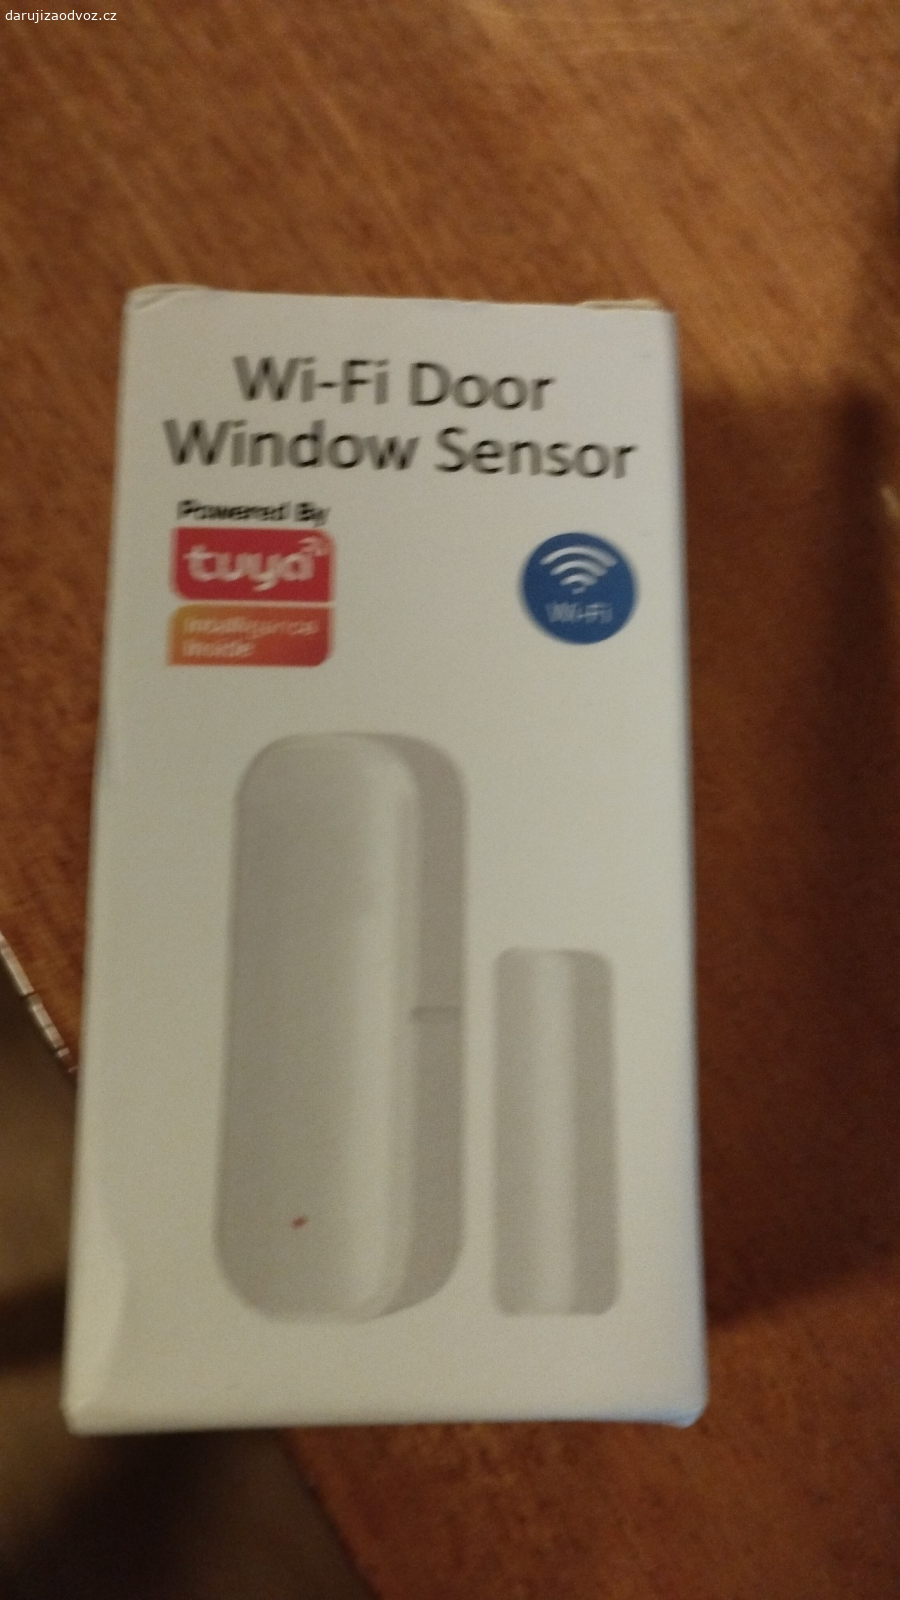 door sendor. daruji nefunkcni sensor otevrenych dveří. nejde sparovat s wifi routerem.